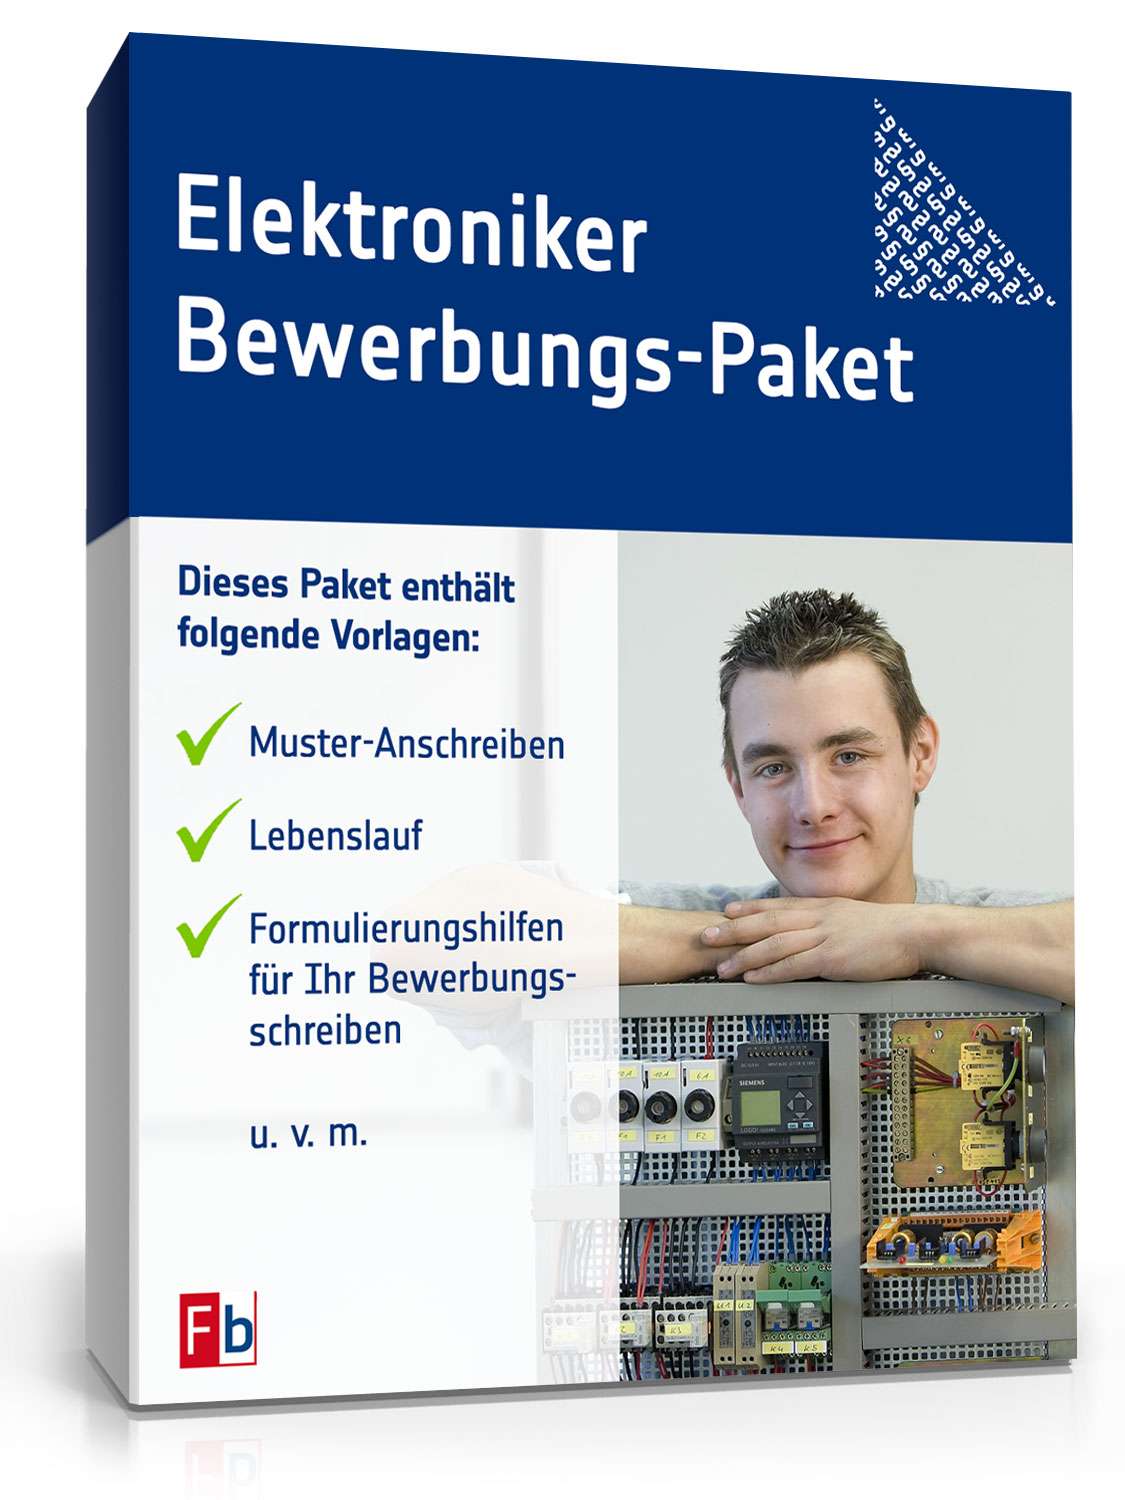 Hauptbild des Produkts: Elektroniker Bewerbungs-Paket 